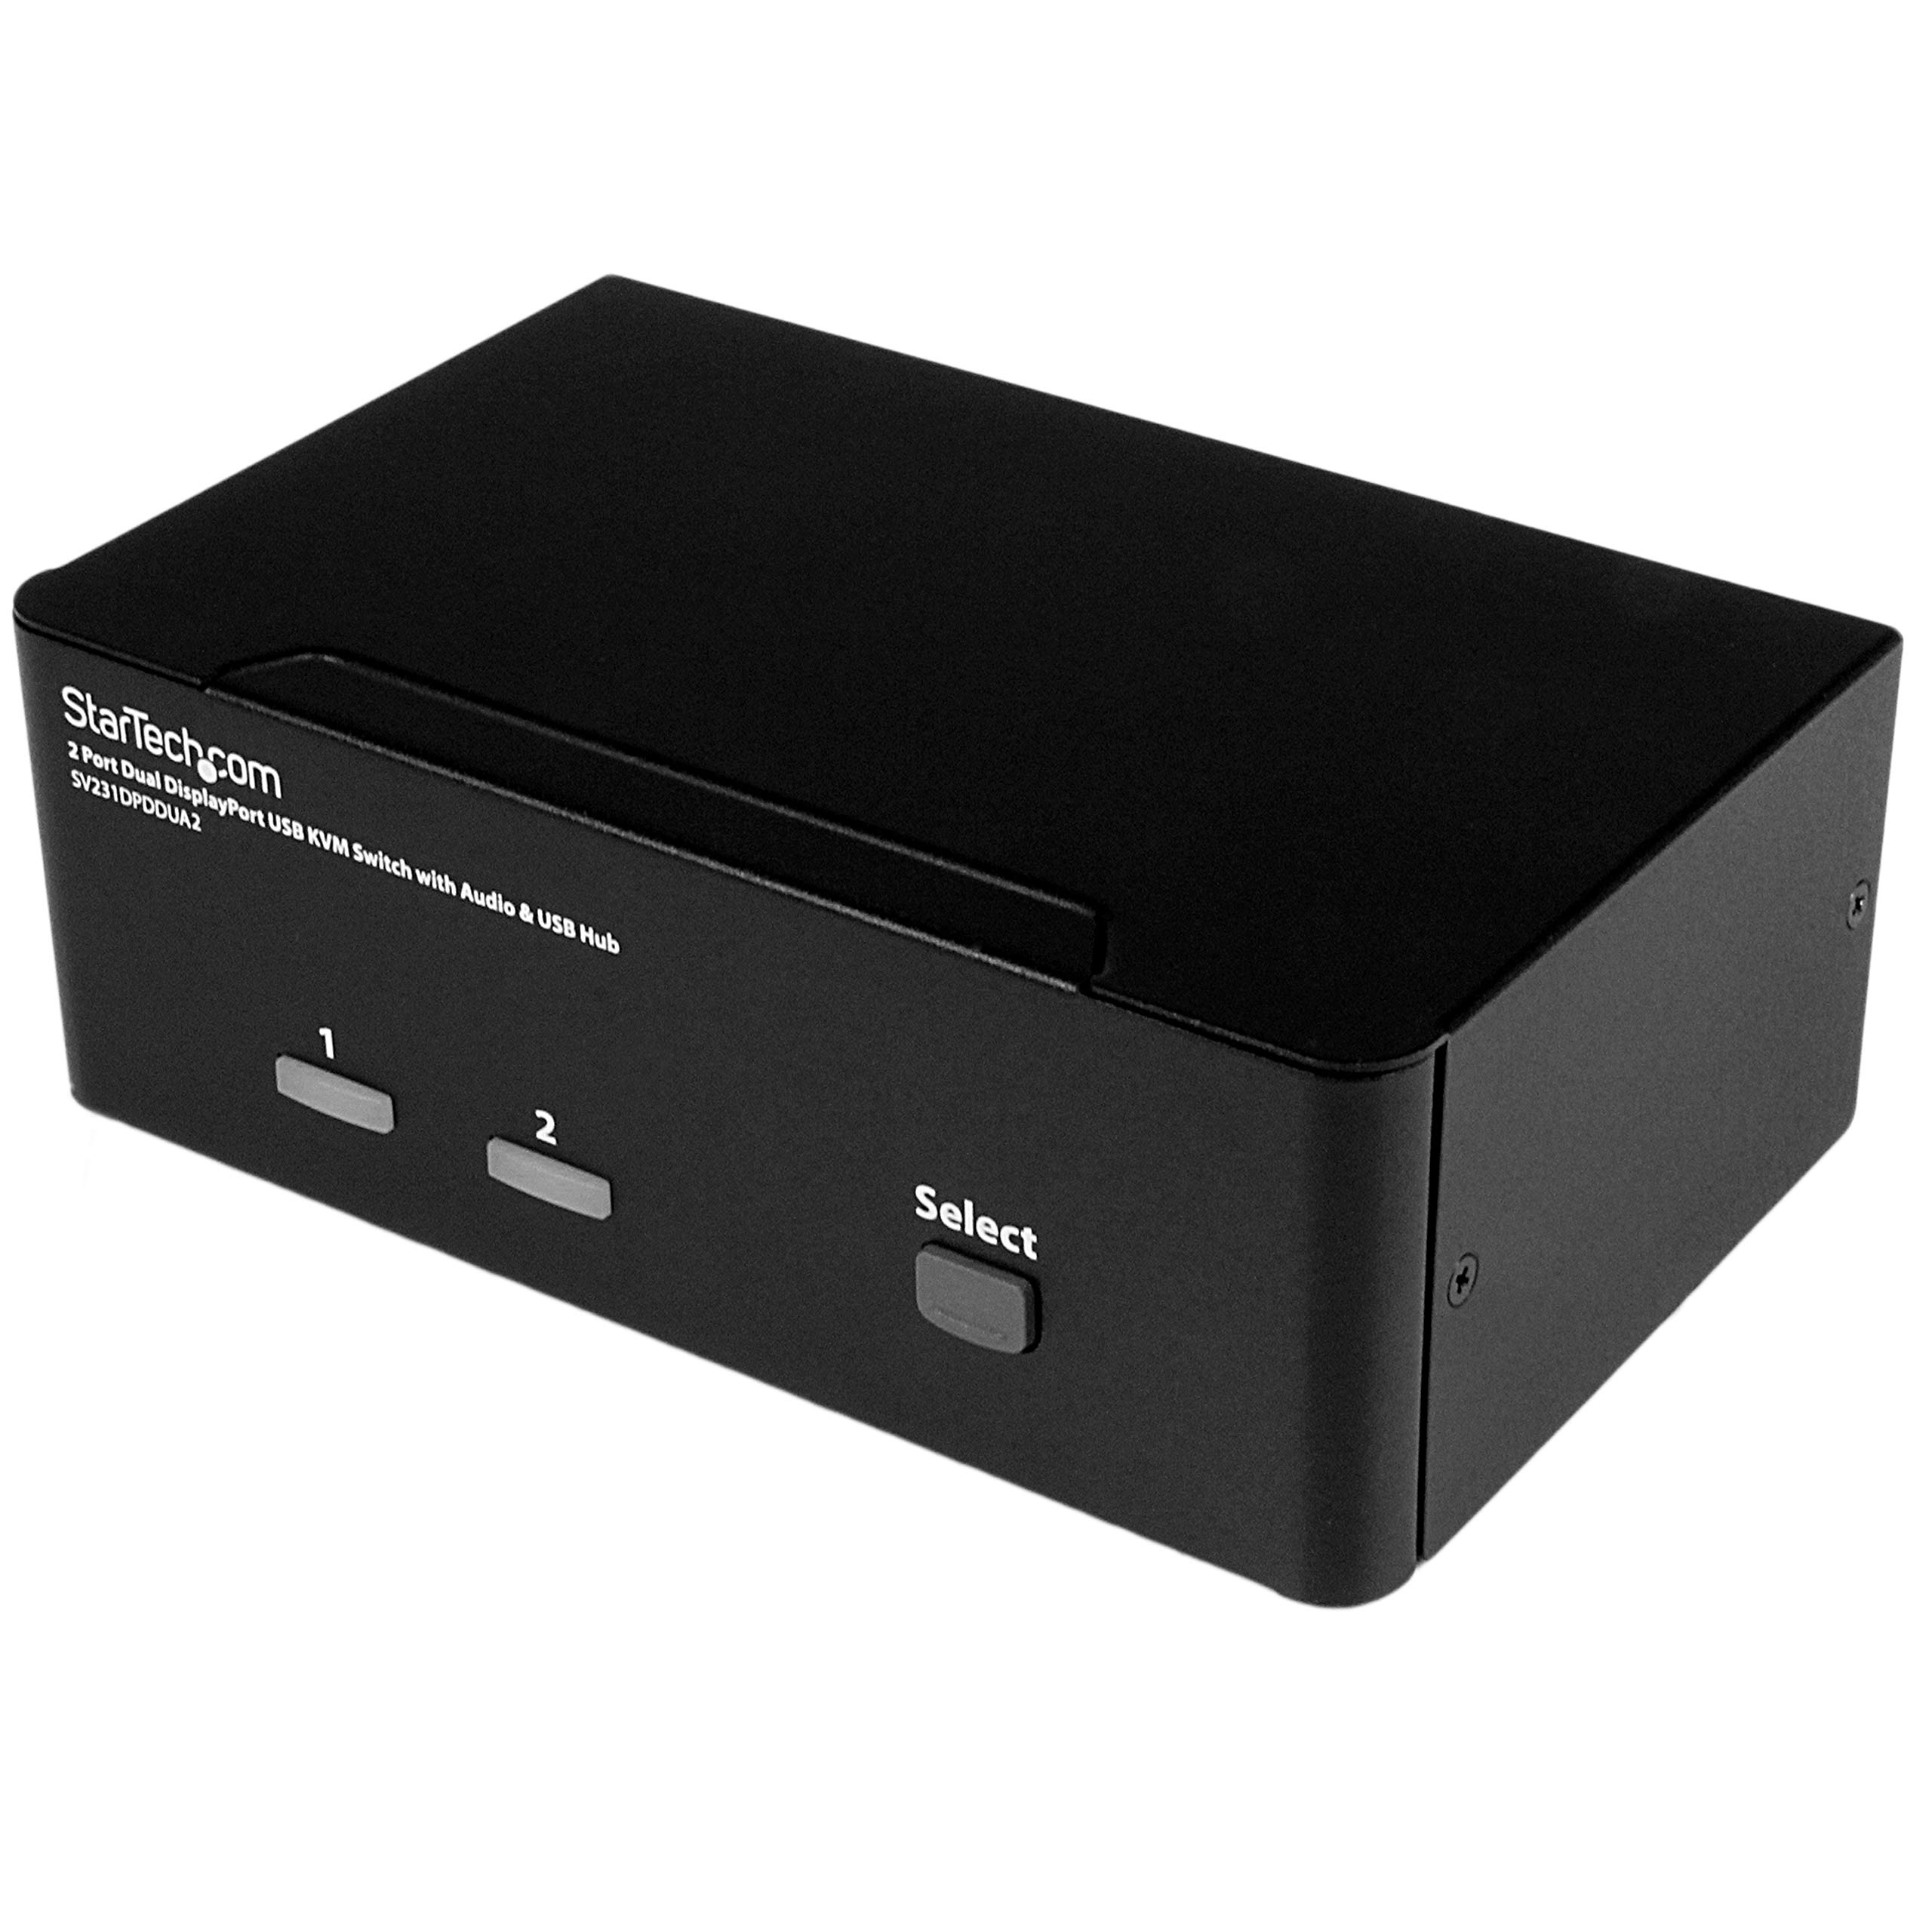 StarTech.com 2-Port DisplayPort KVM Switch - Dual-Monitor - 4K 60 - with Audio & USB Peripheral Support - DP 1.2 - USB Hub (SV231DPDDUA2),Black